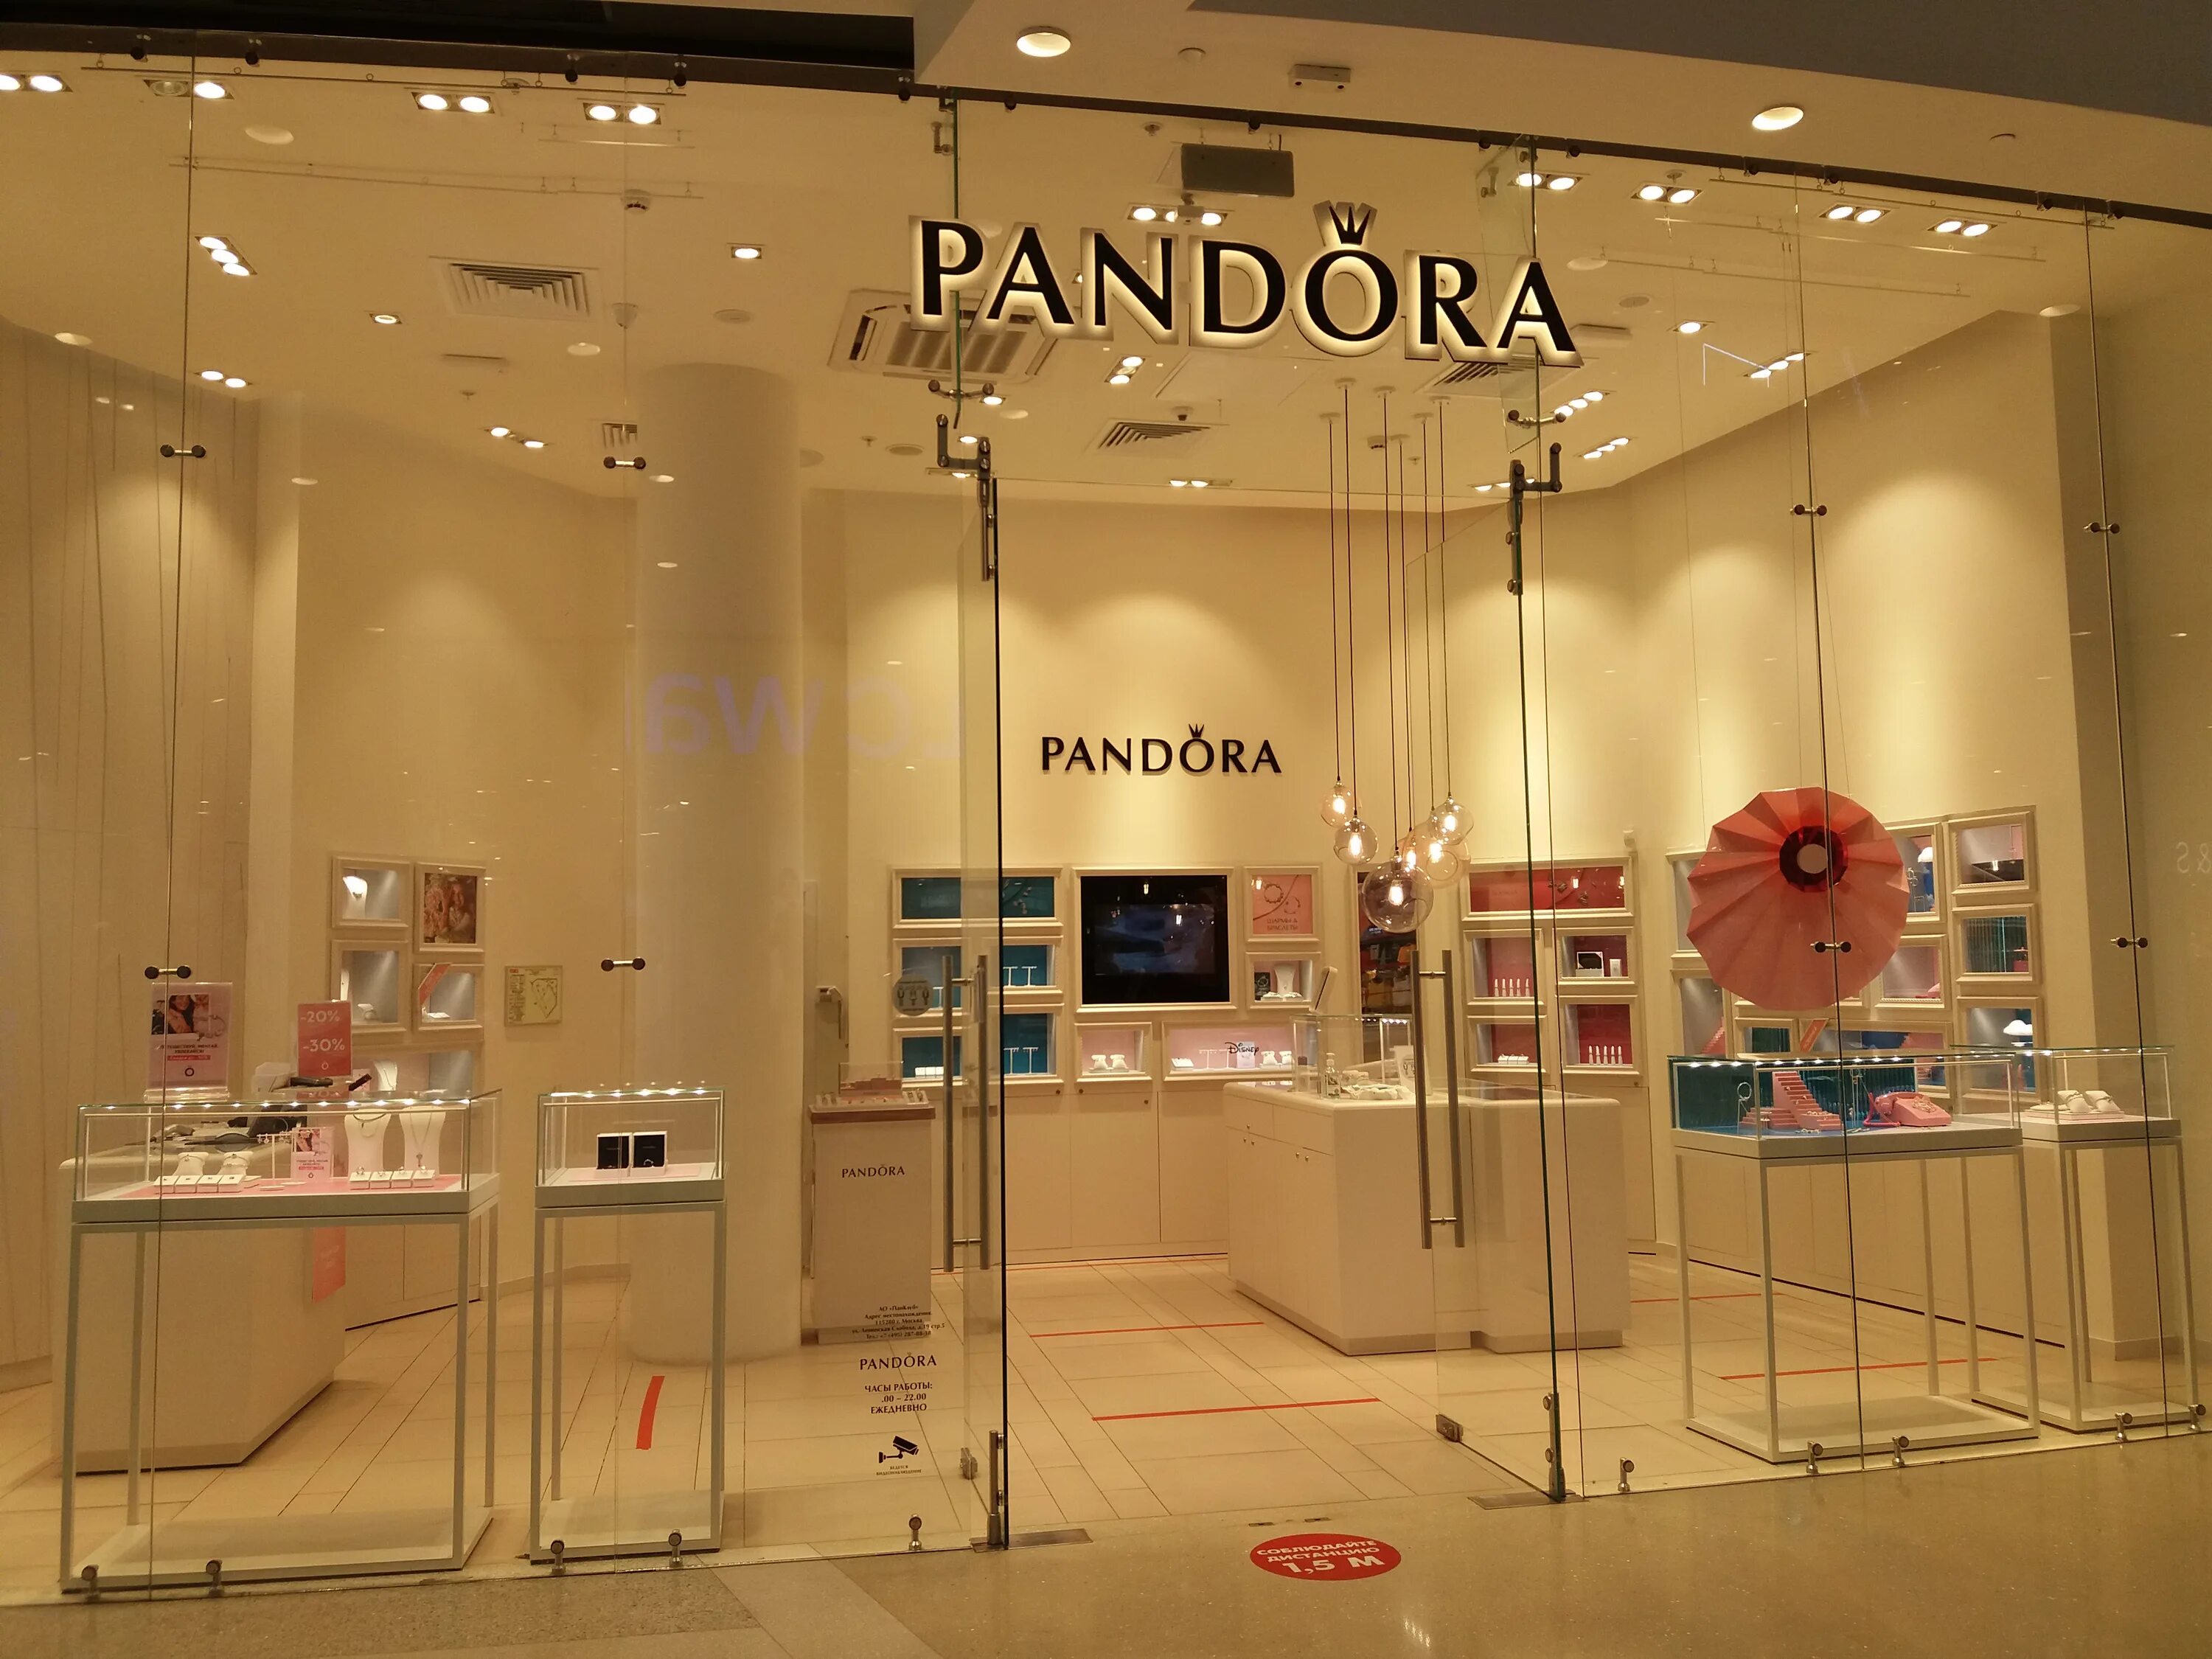 Pandora Москва. Пандора магазин в Москве. Пандора панорамы. Pandora Jewelry.